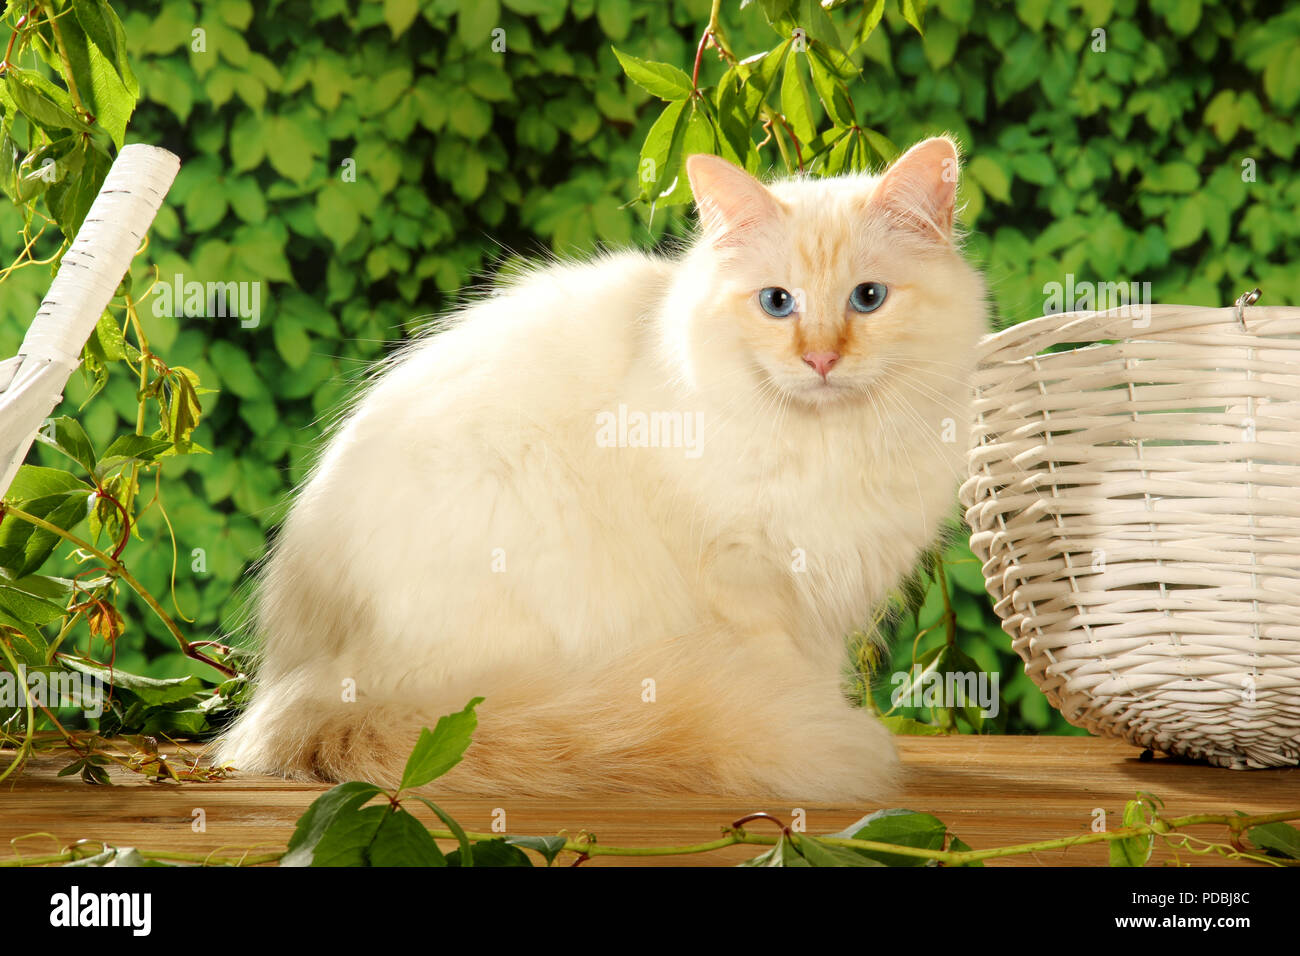 Birman Cat Price Australia 81021+ Nama Untuk Kucing Comel, Lucu dan Unik